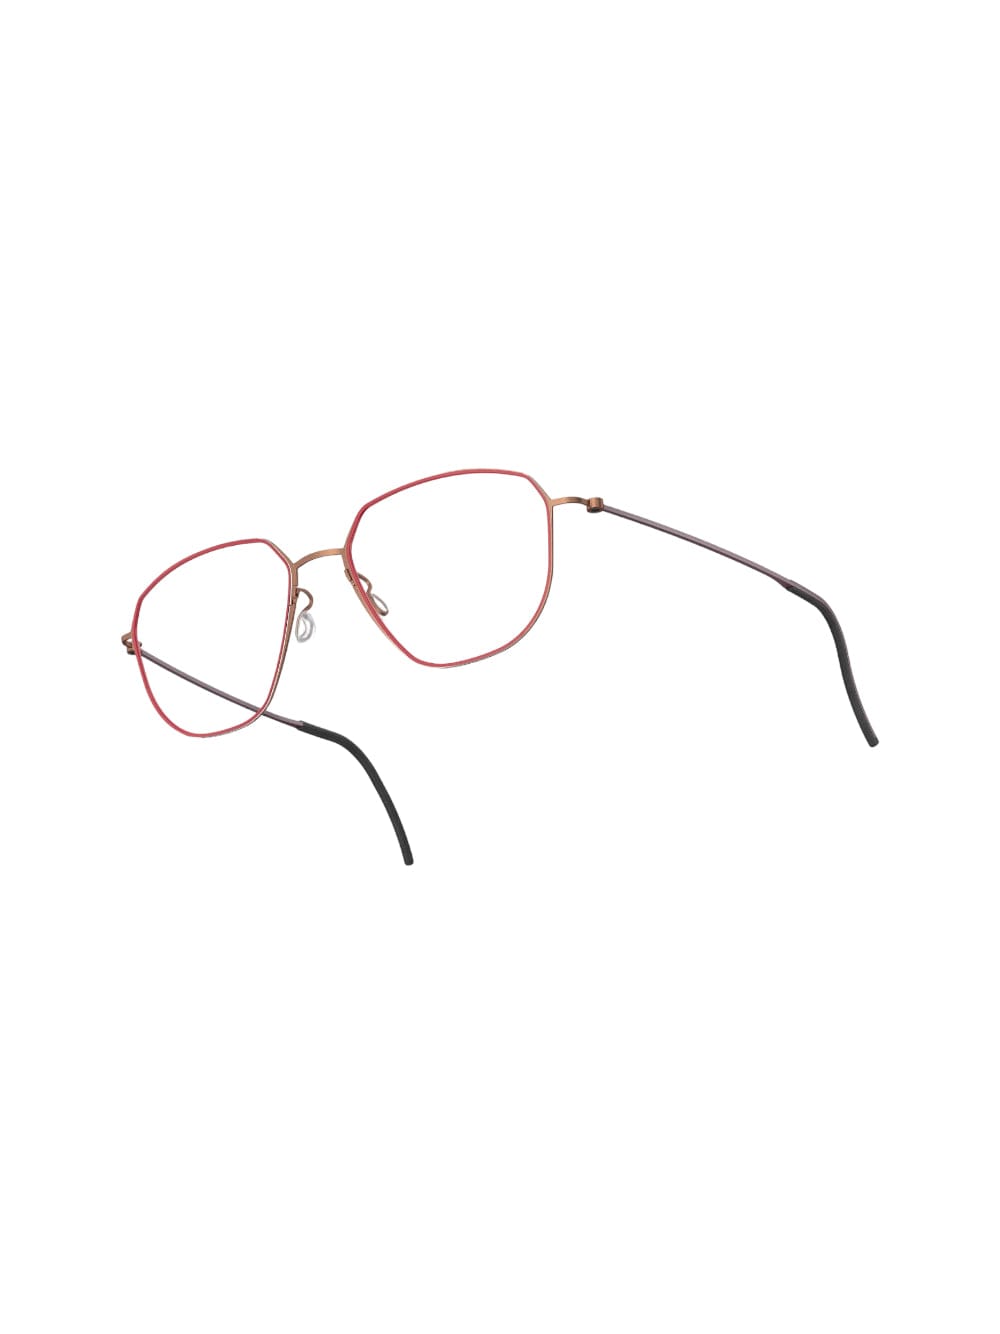 Lindberg 5505 - Bronze & Red Glasses